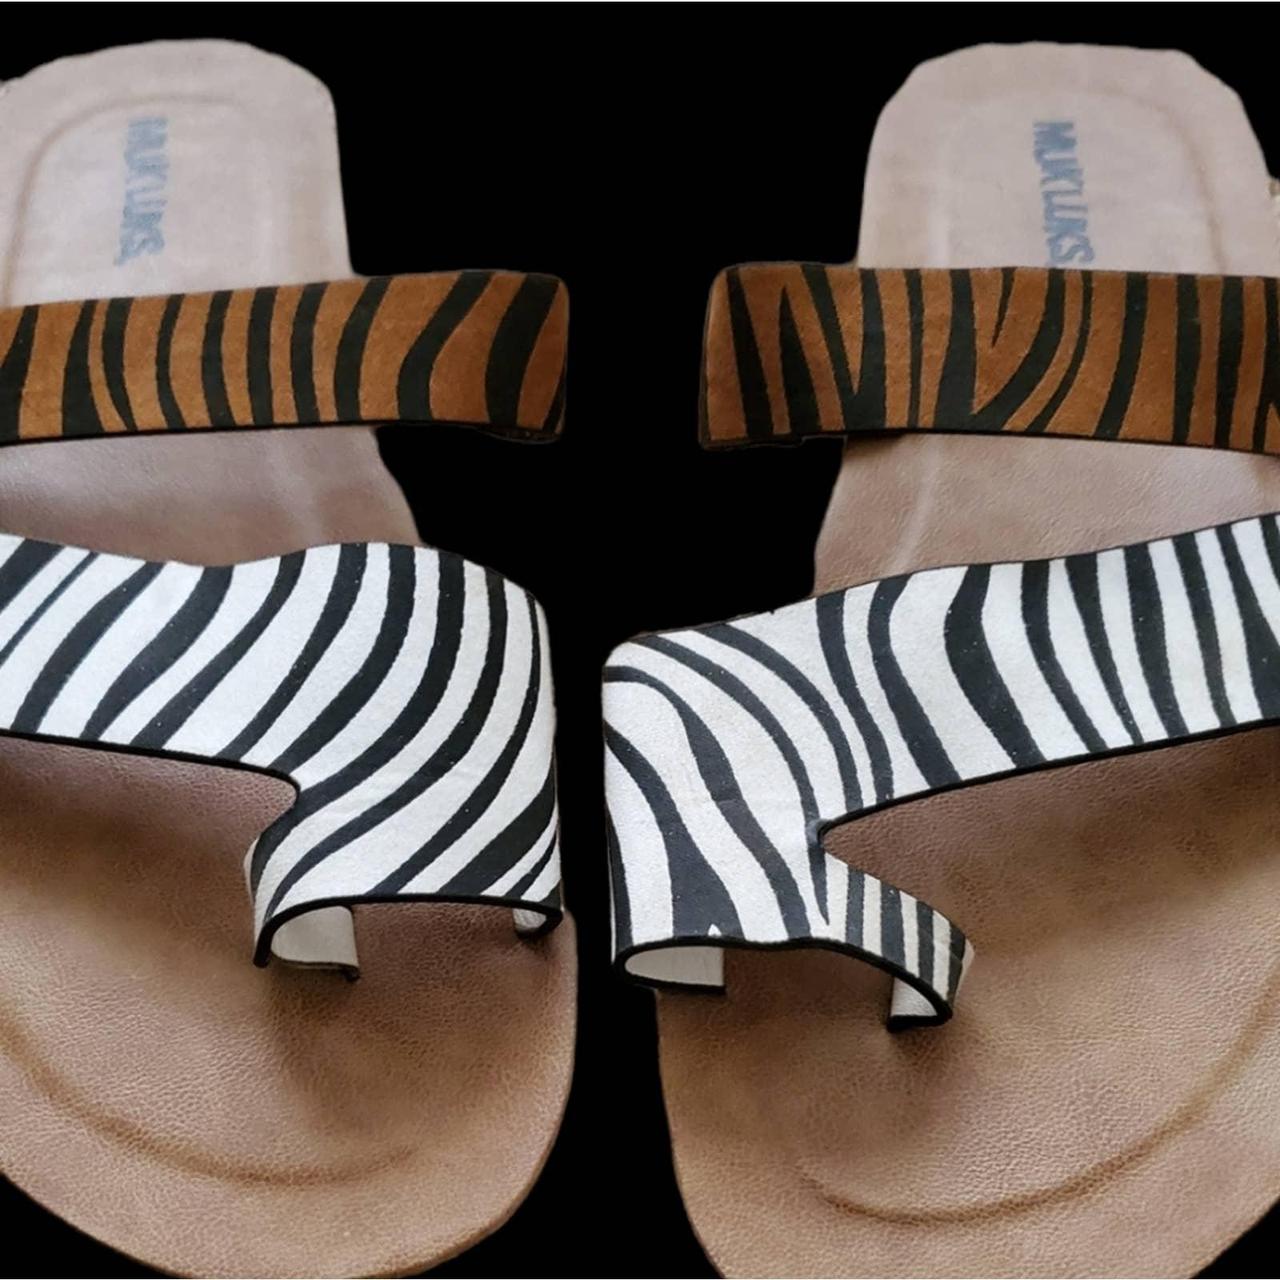 Product Image 2 - Muk Luks Size 11 Zebra